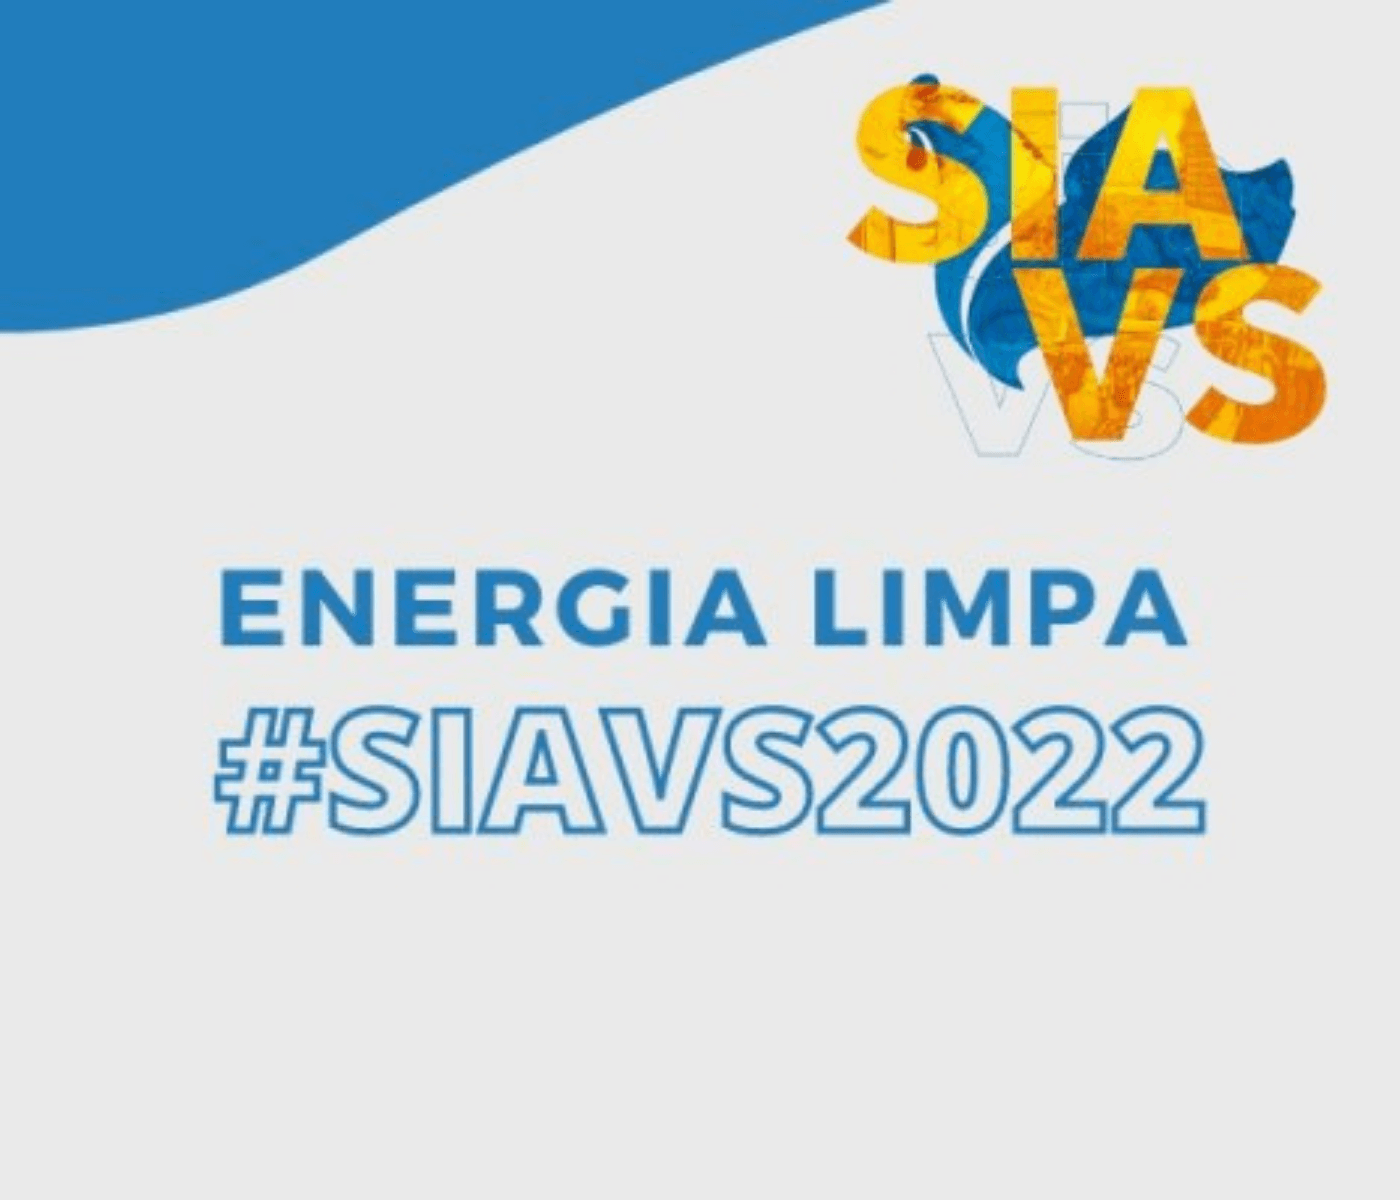 Energia limpa moverá o #SIAVS 2022